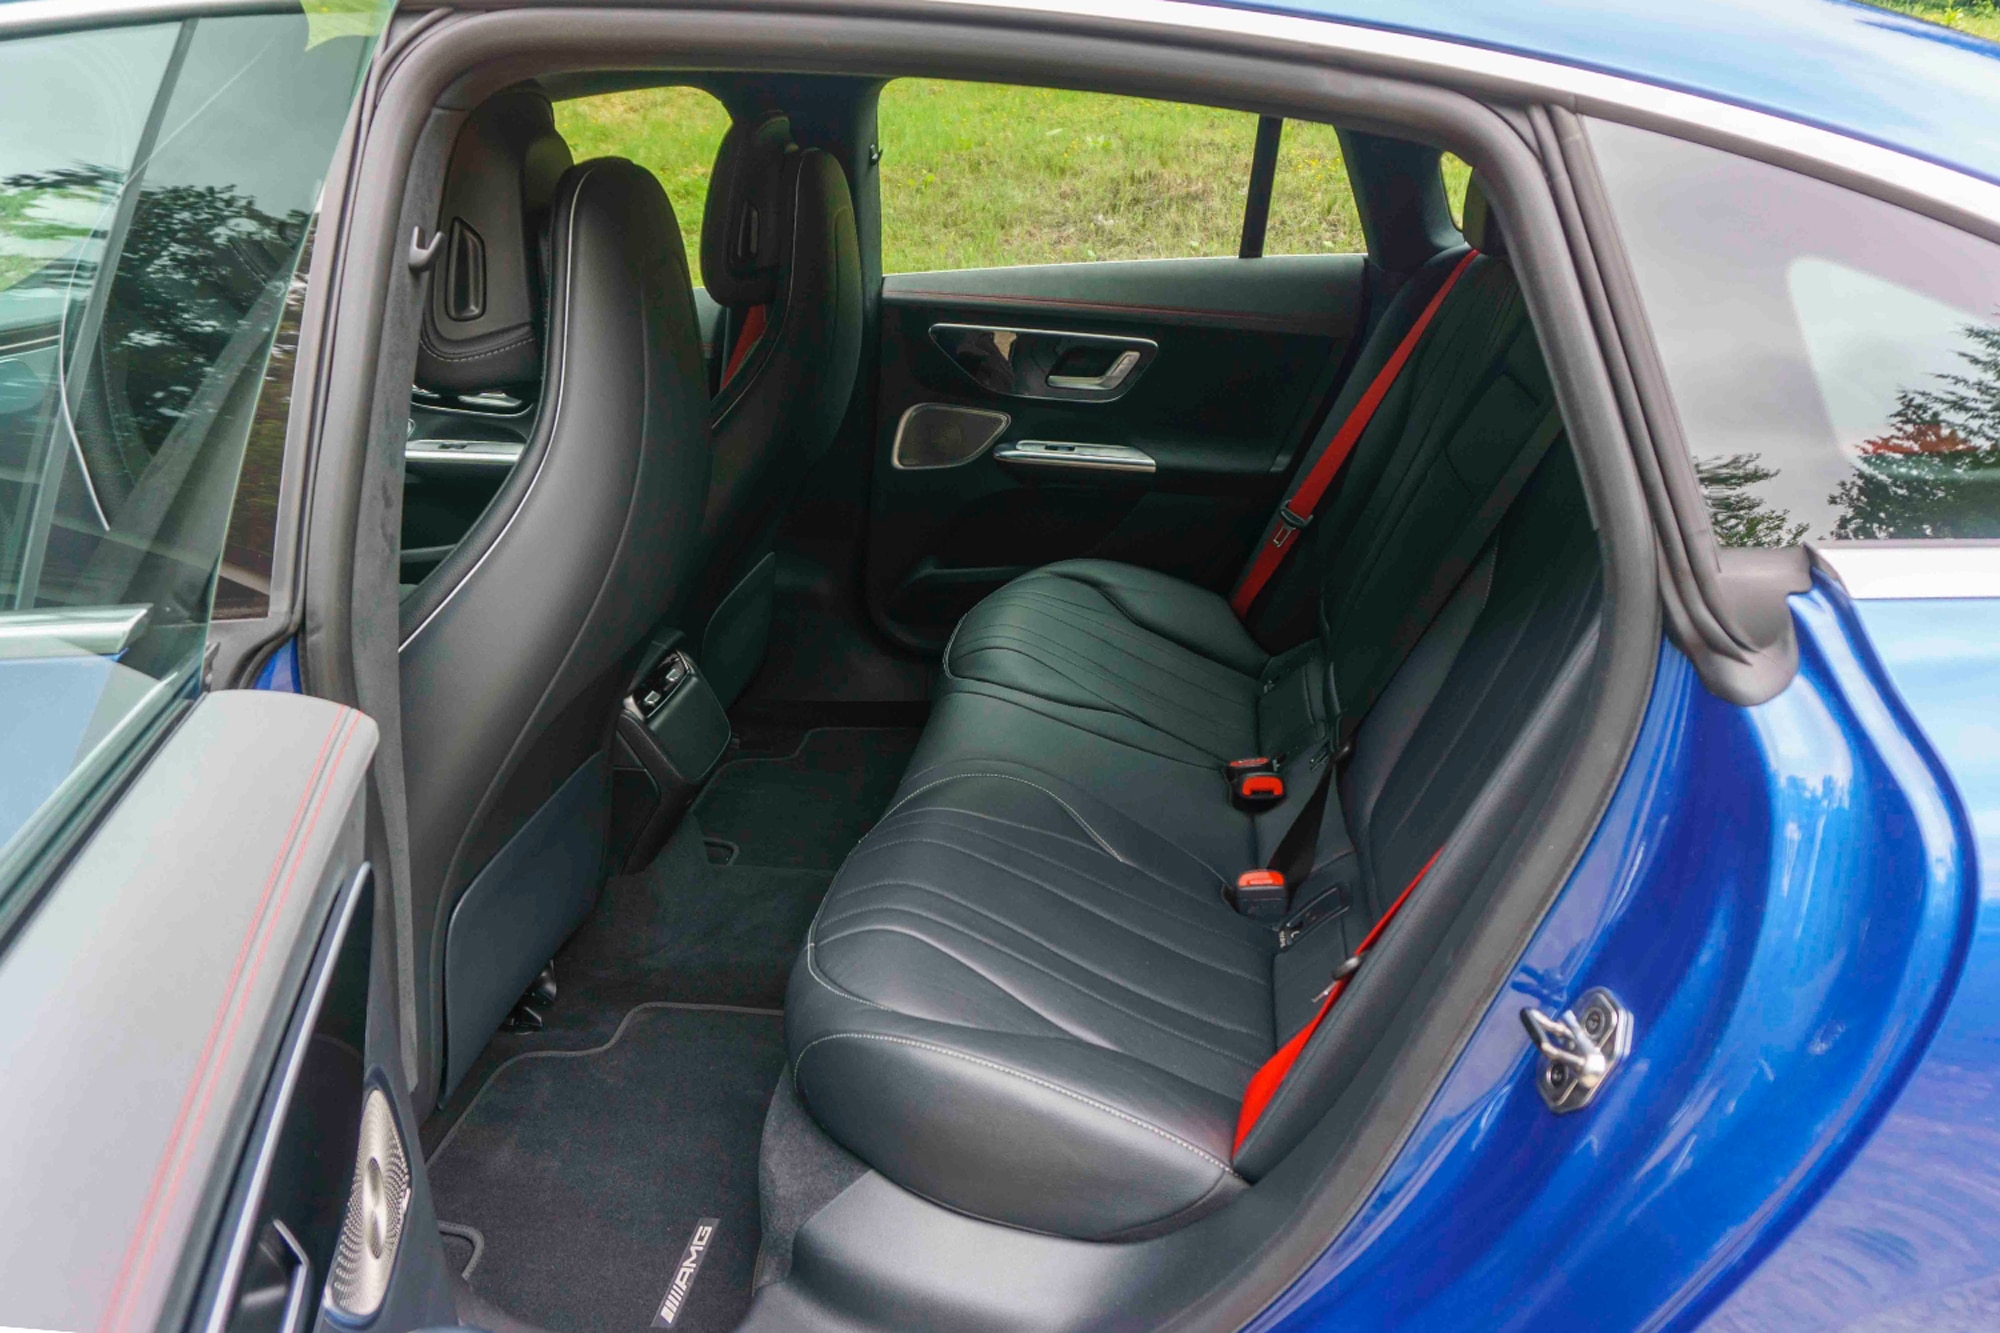 2023 Mercedes-Benz EQE Sedan in Starling Blue back passenger seat